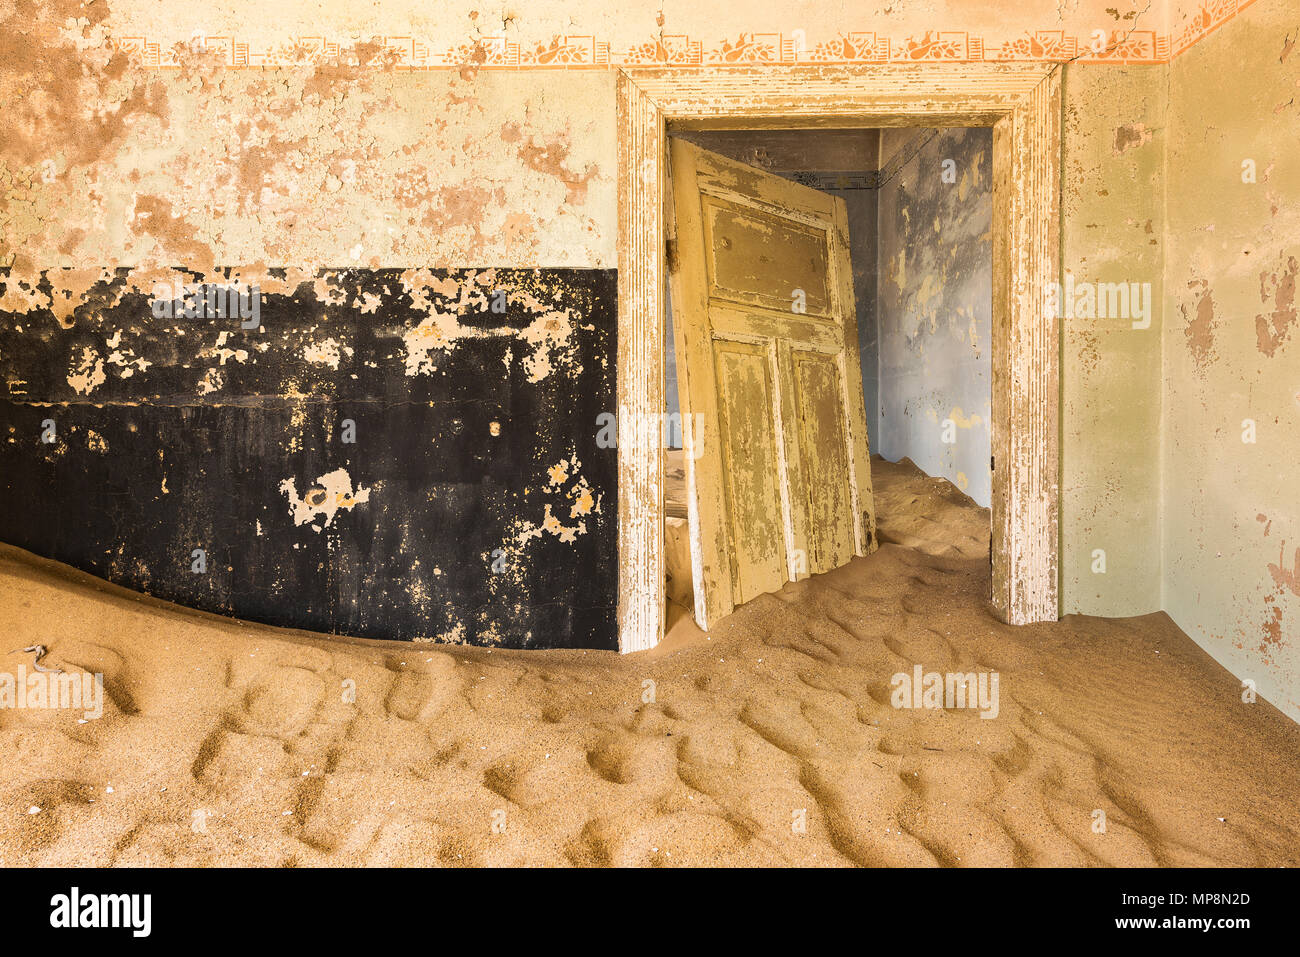 The Abandoned Mining Town of Kolmanskop, Namibia. Stock Photo